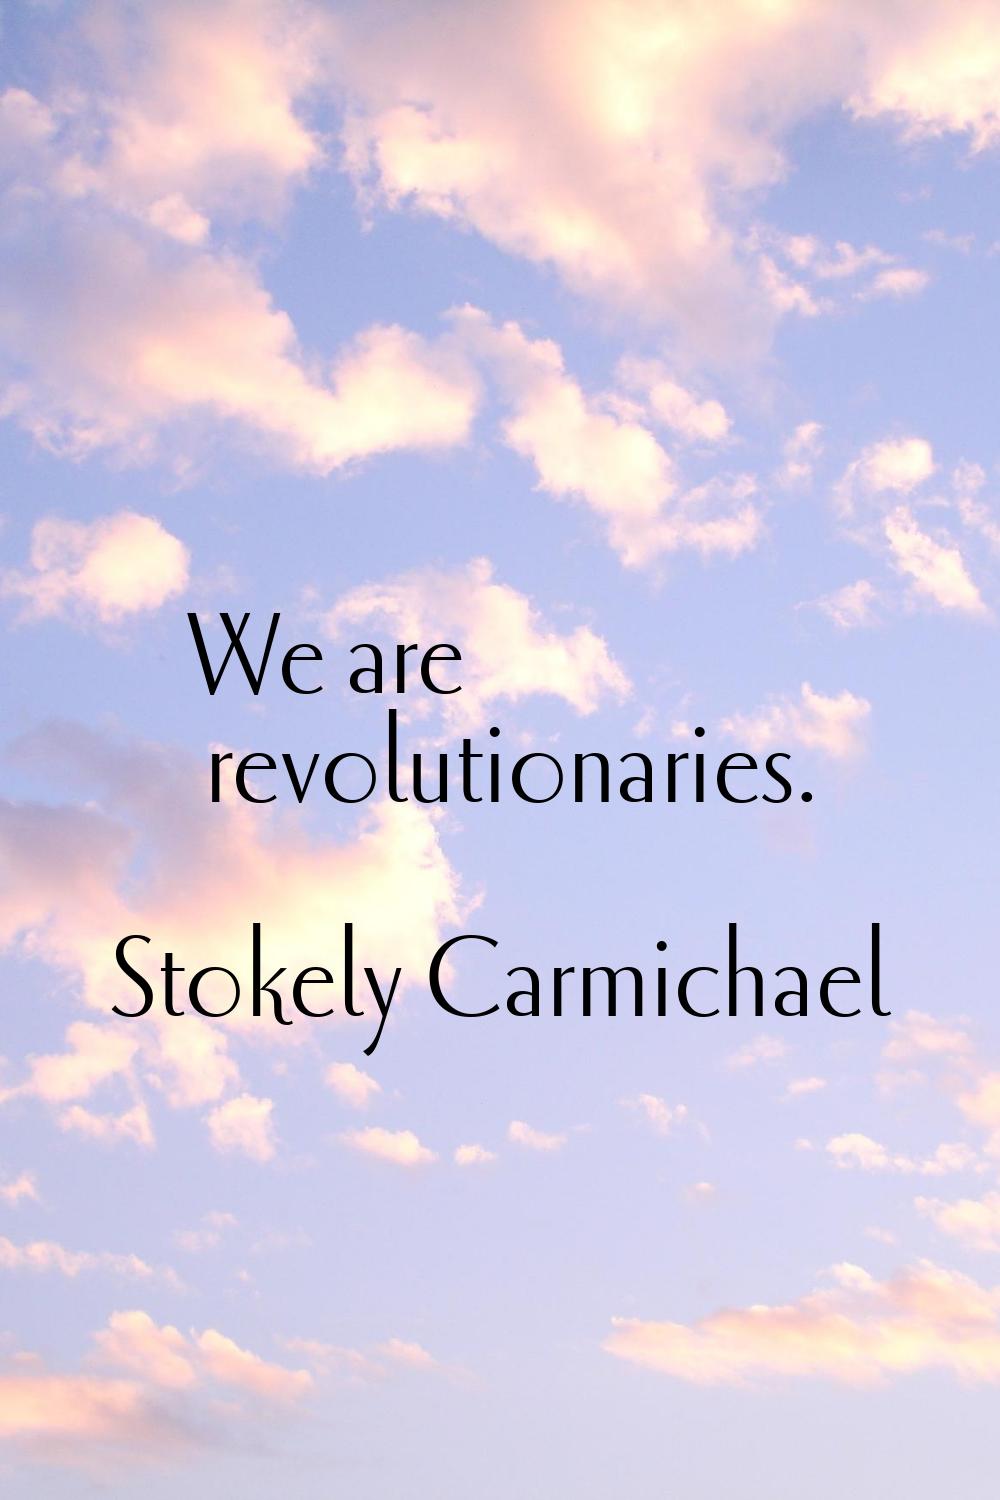 We are revolutionaries.